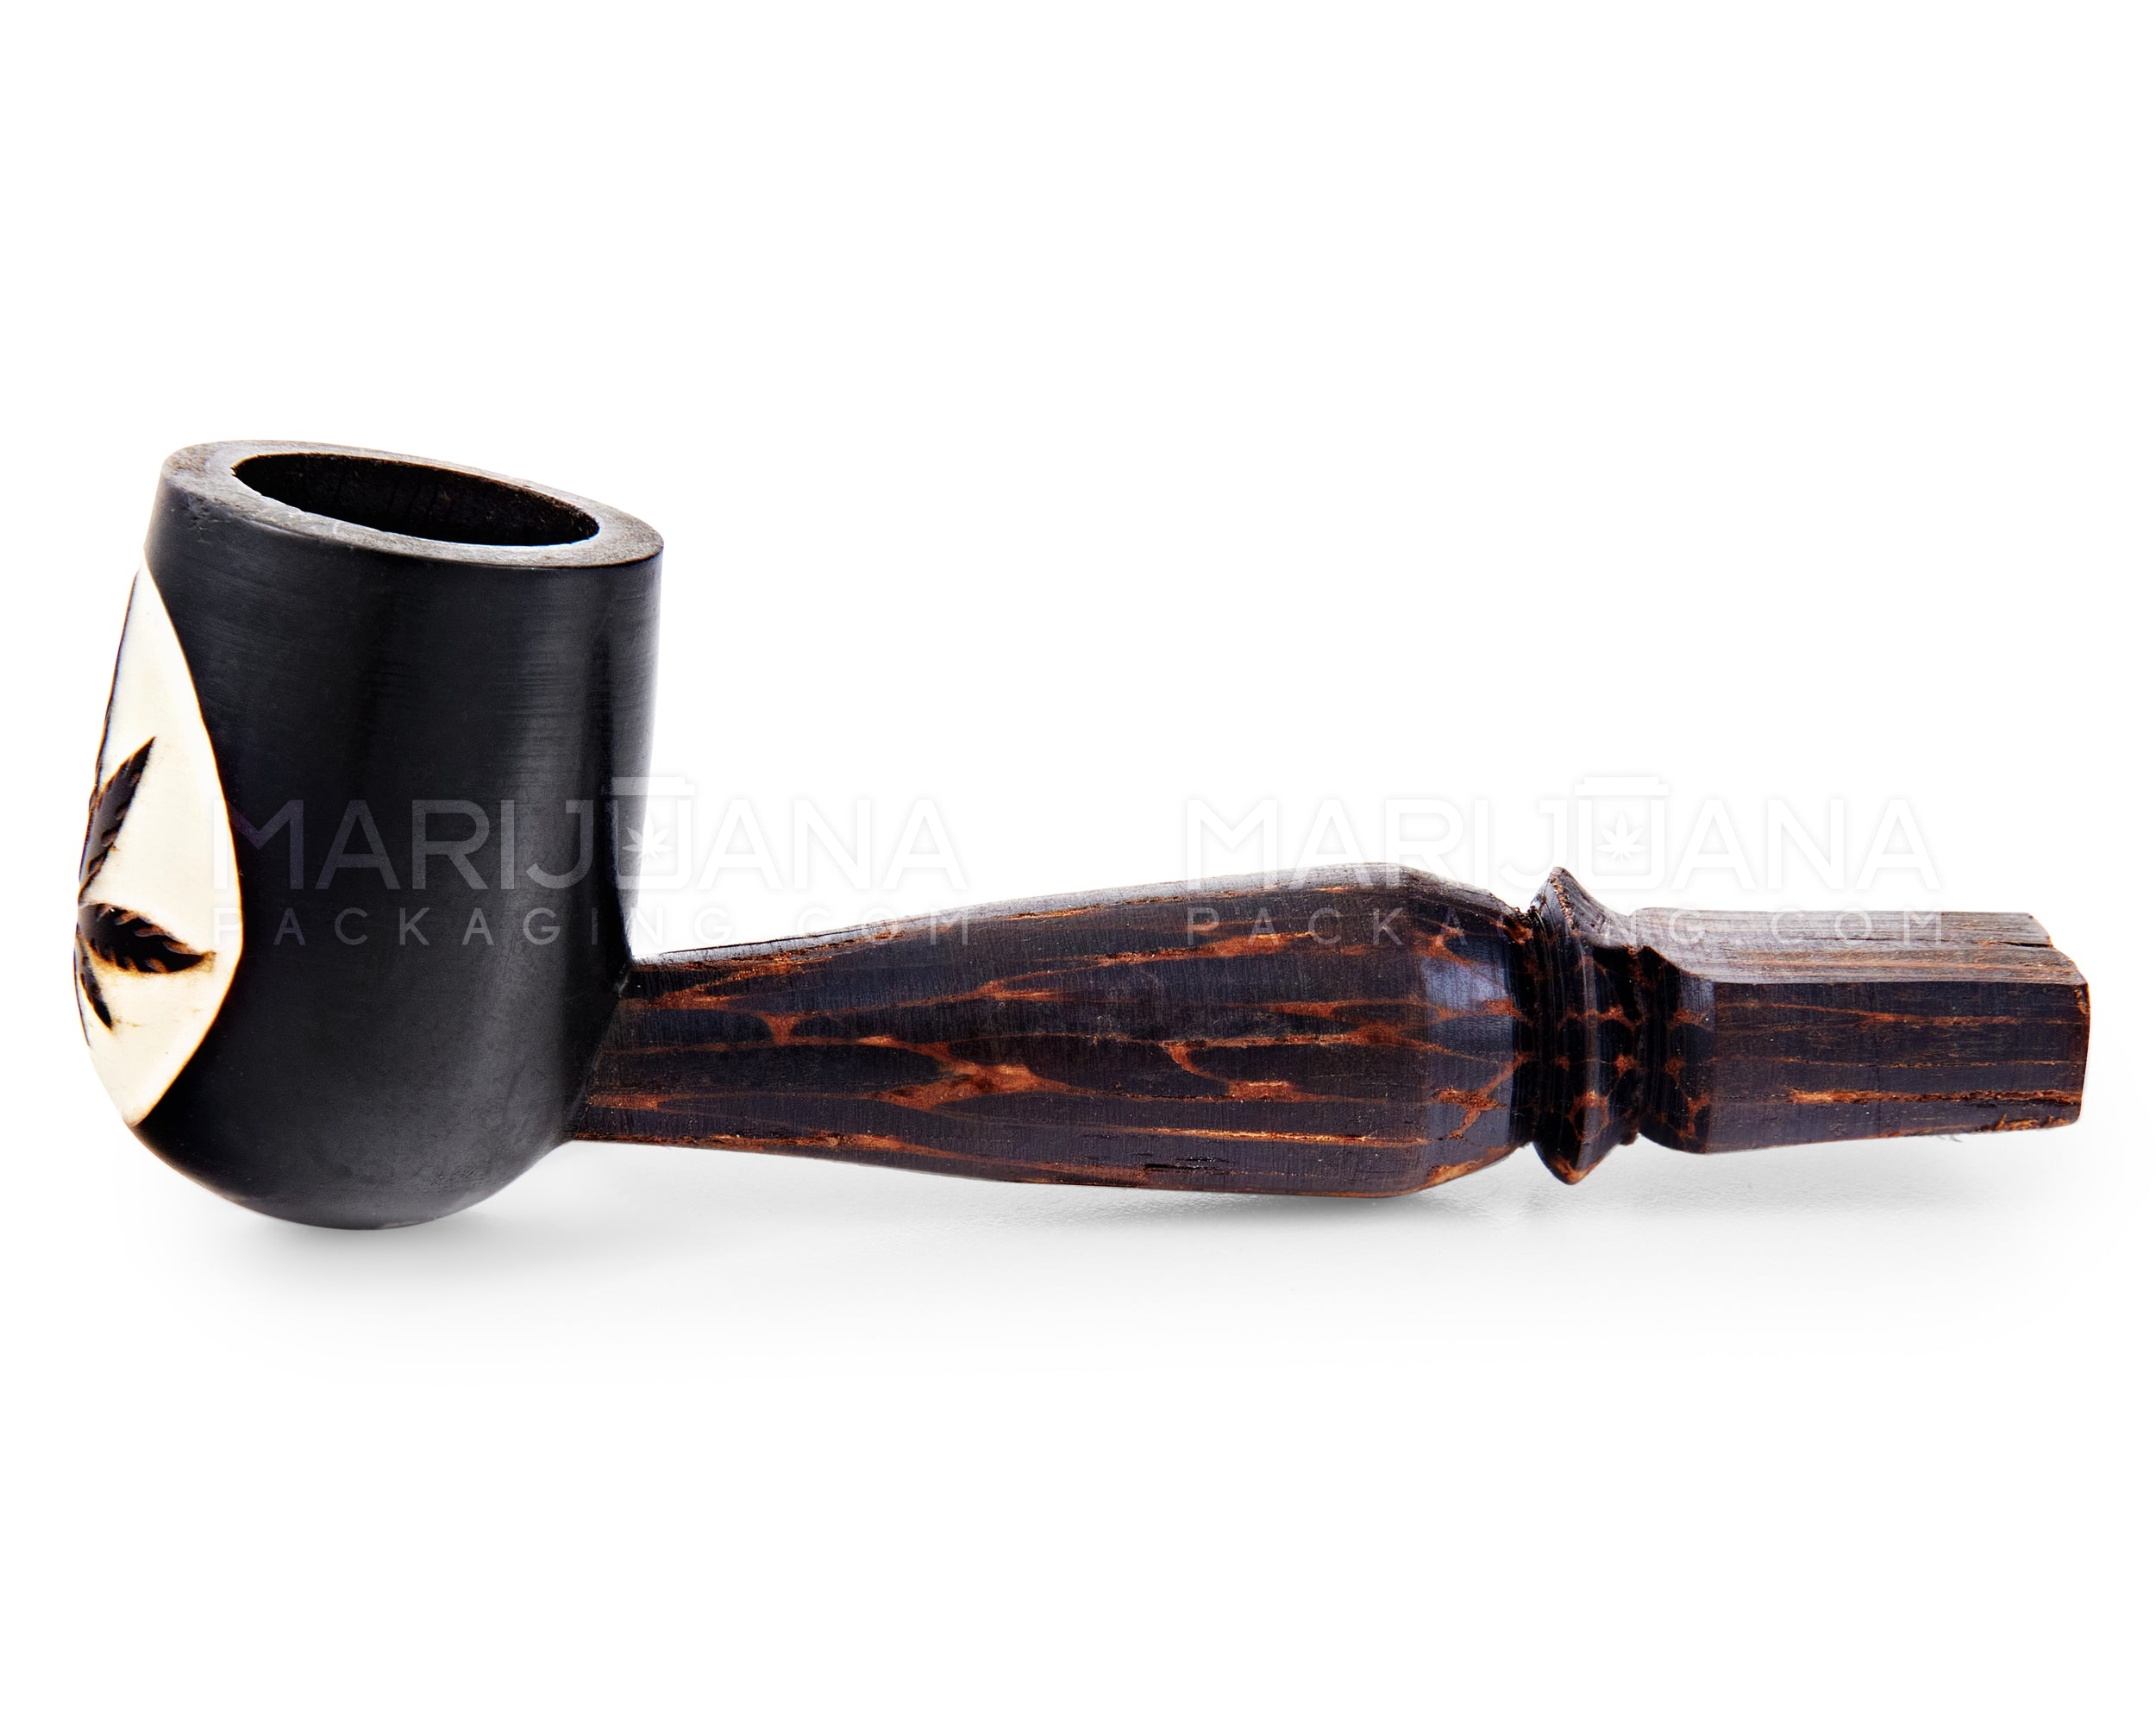 420 Leaf Design Tagua Sherlock Hand Pipe | 3.5in Long - Wood - Brown - 5